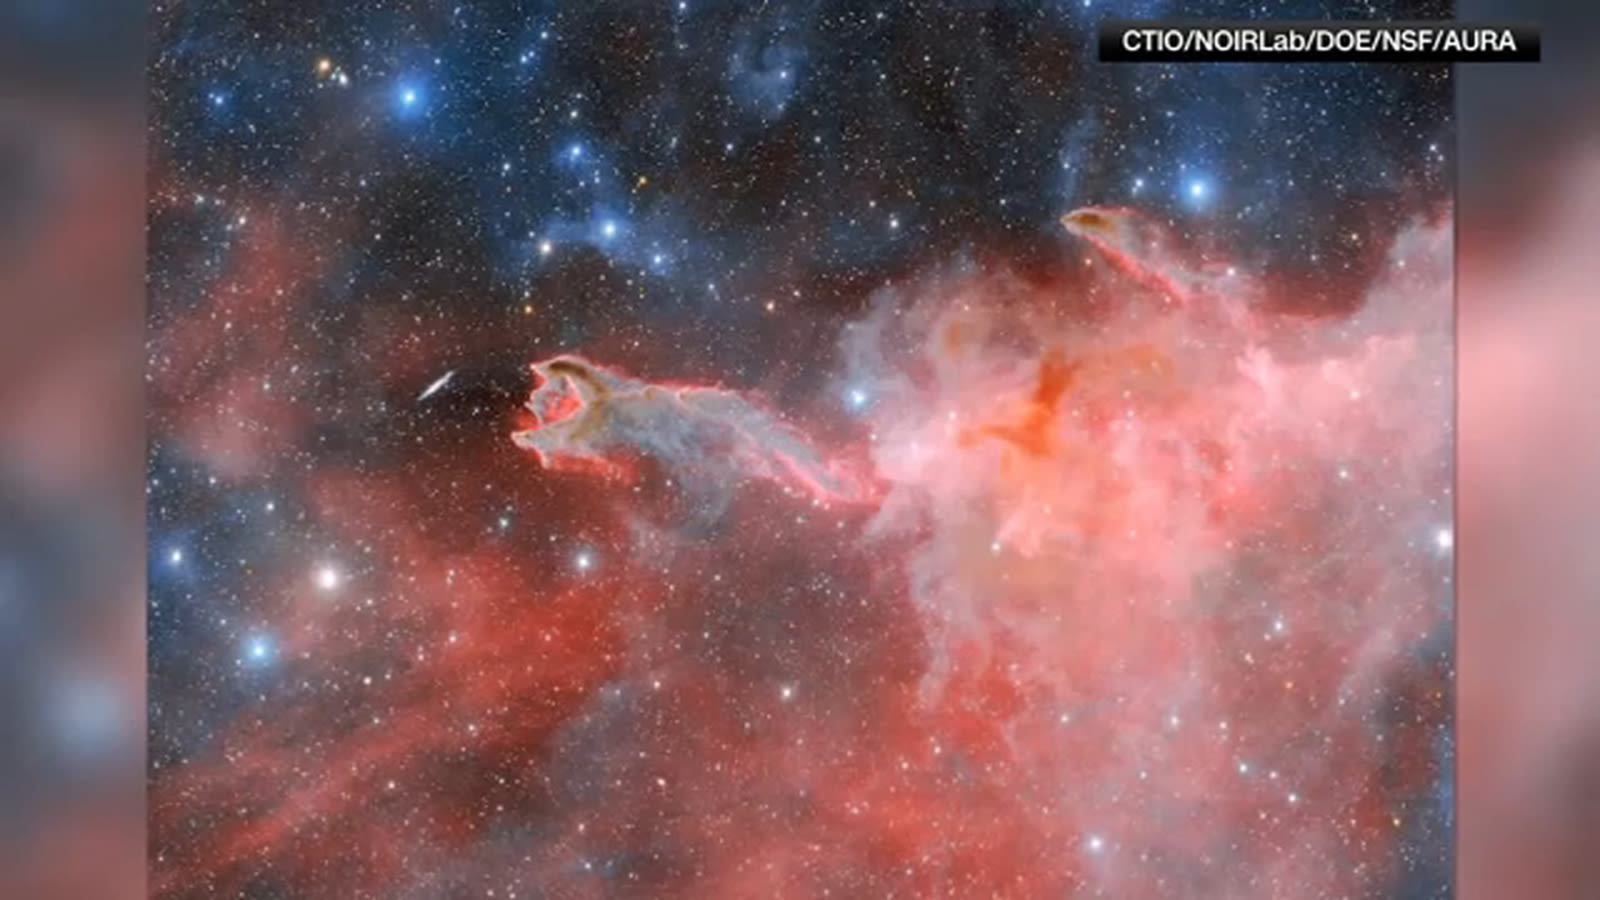 Stunning telescope image shows 'God's Hand' reaching across the Milky Way